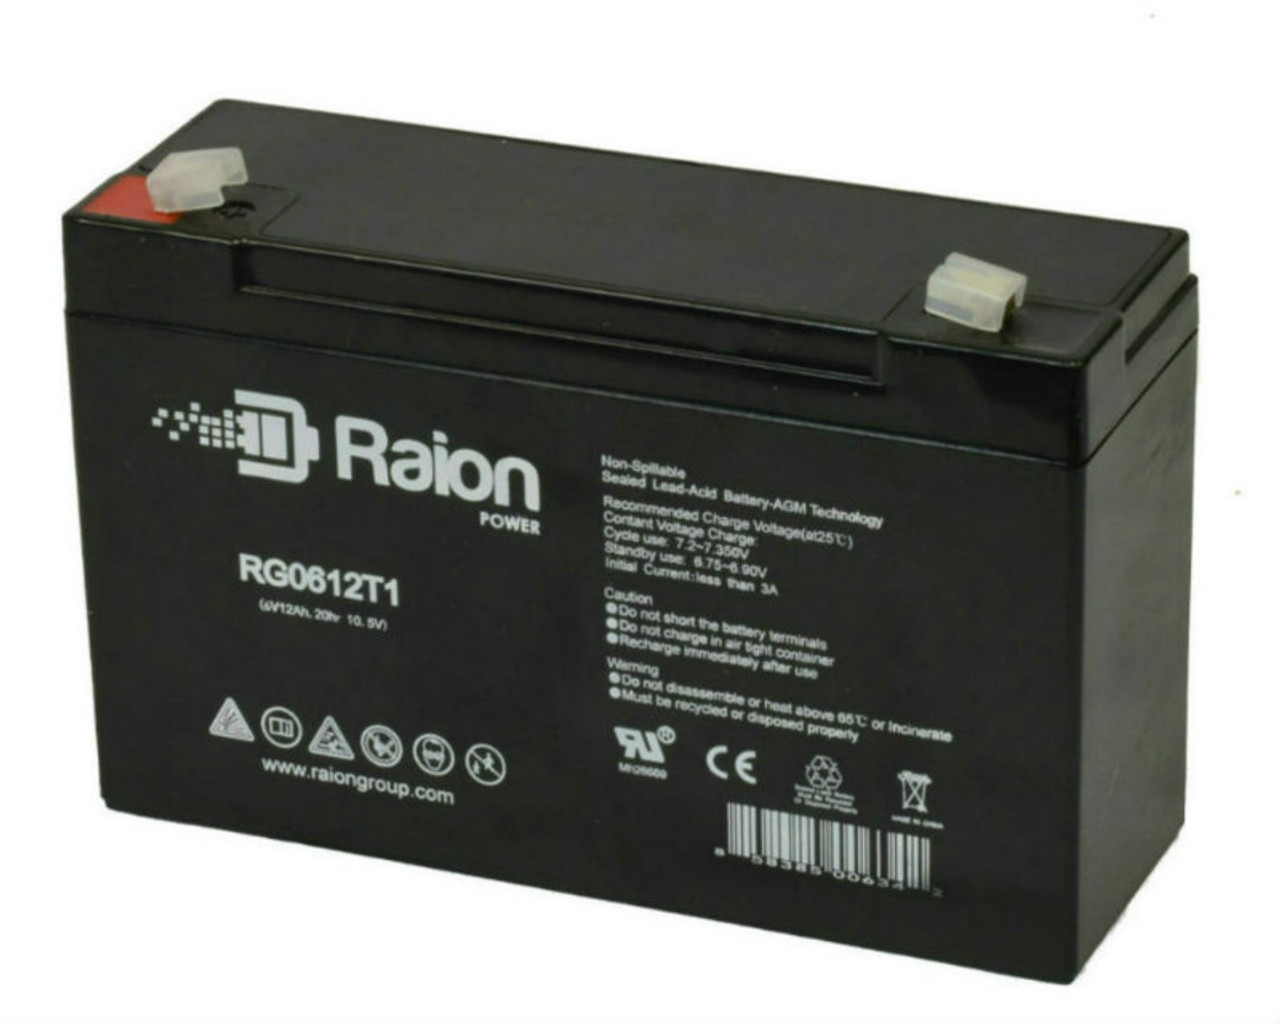 Raion Power RG06120T1 Replacement 6V 12Ah Emergency Light Battery for Elan 1662